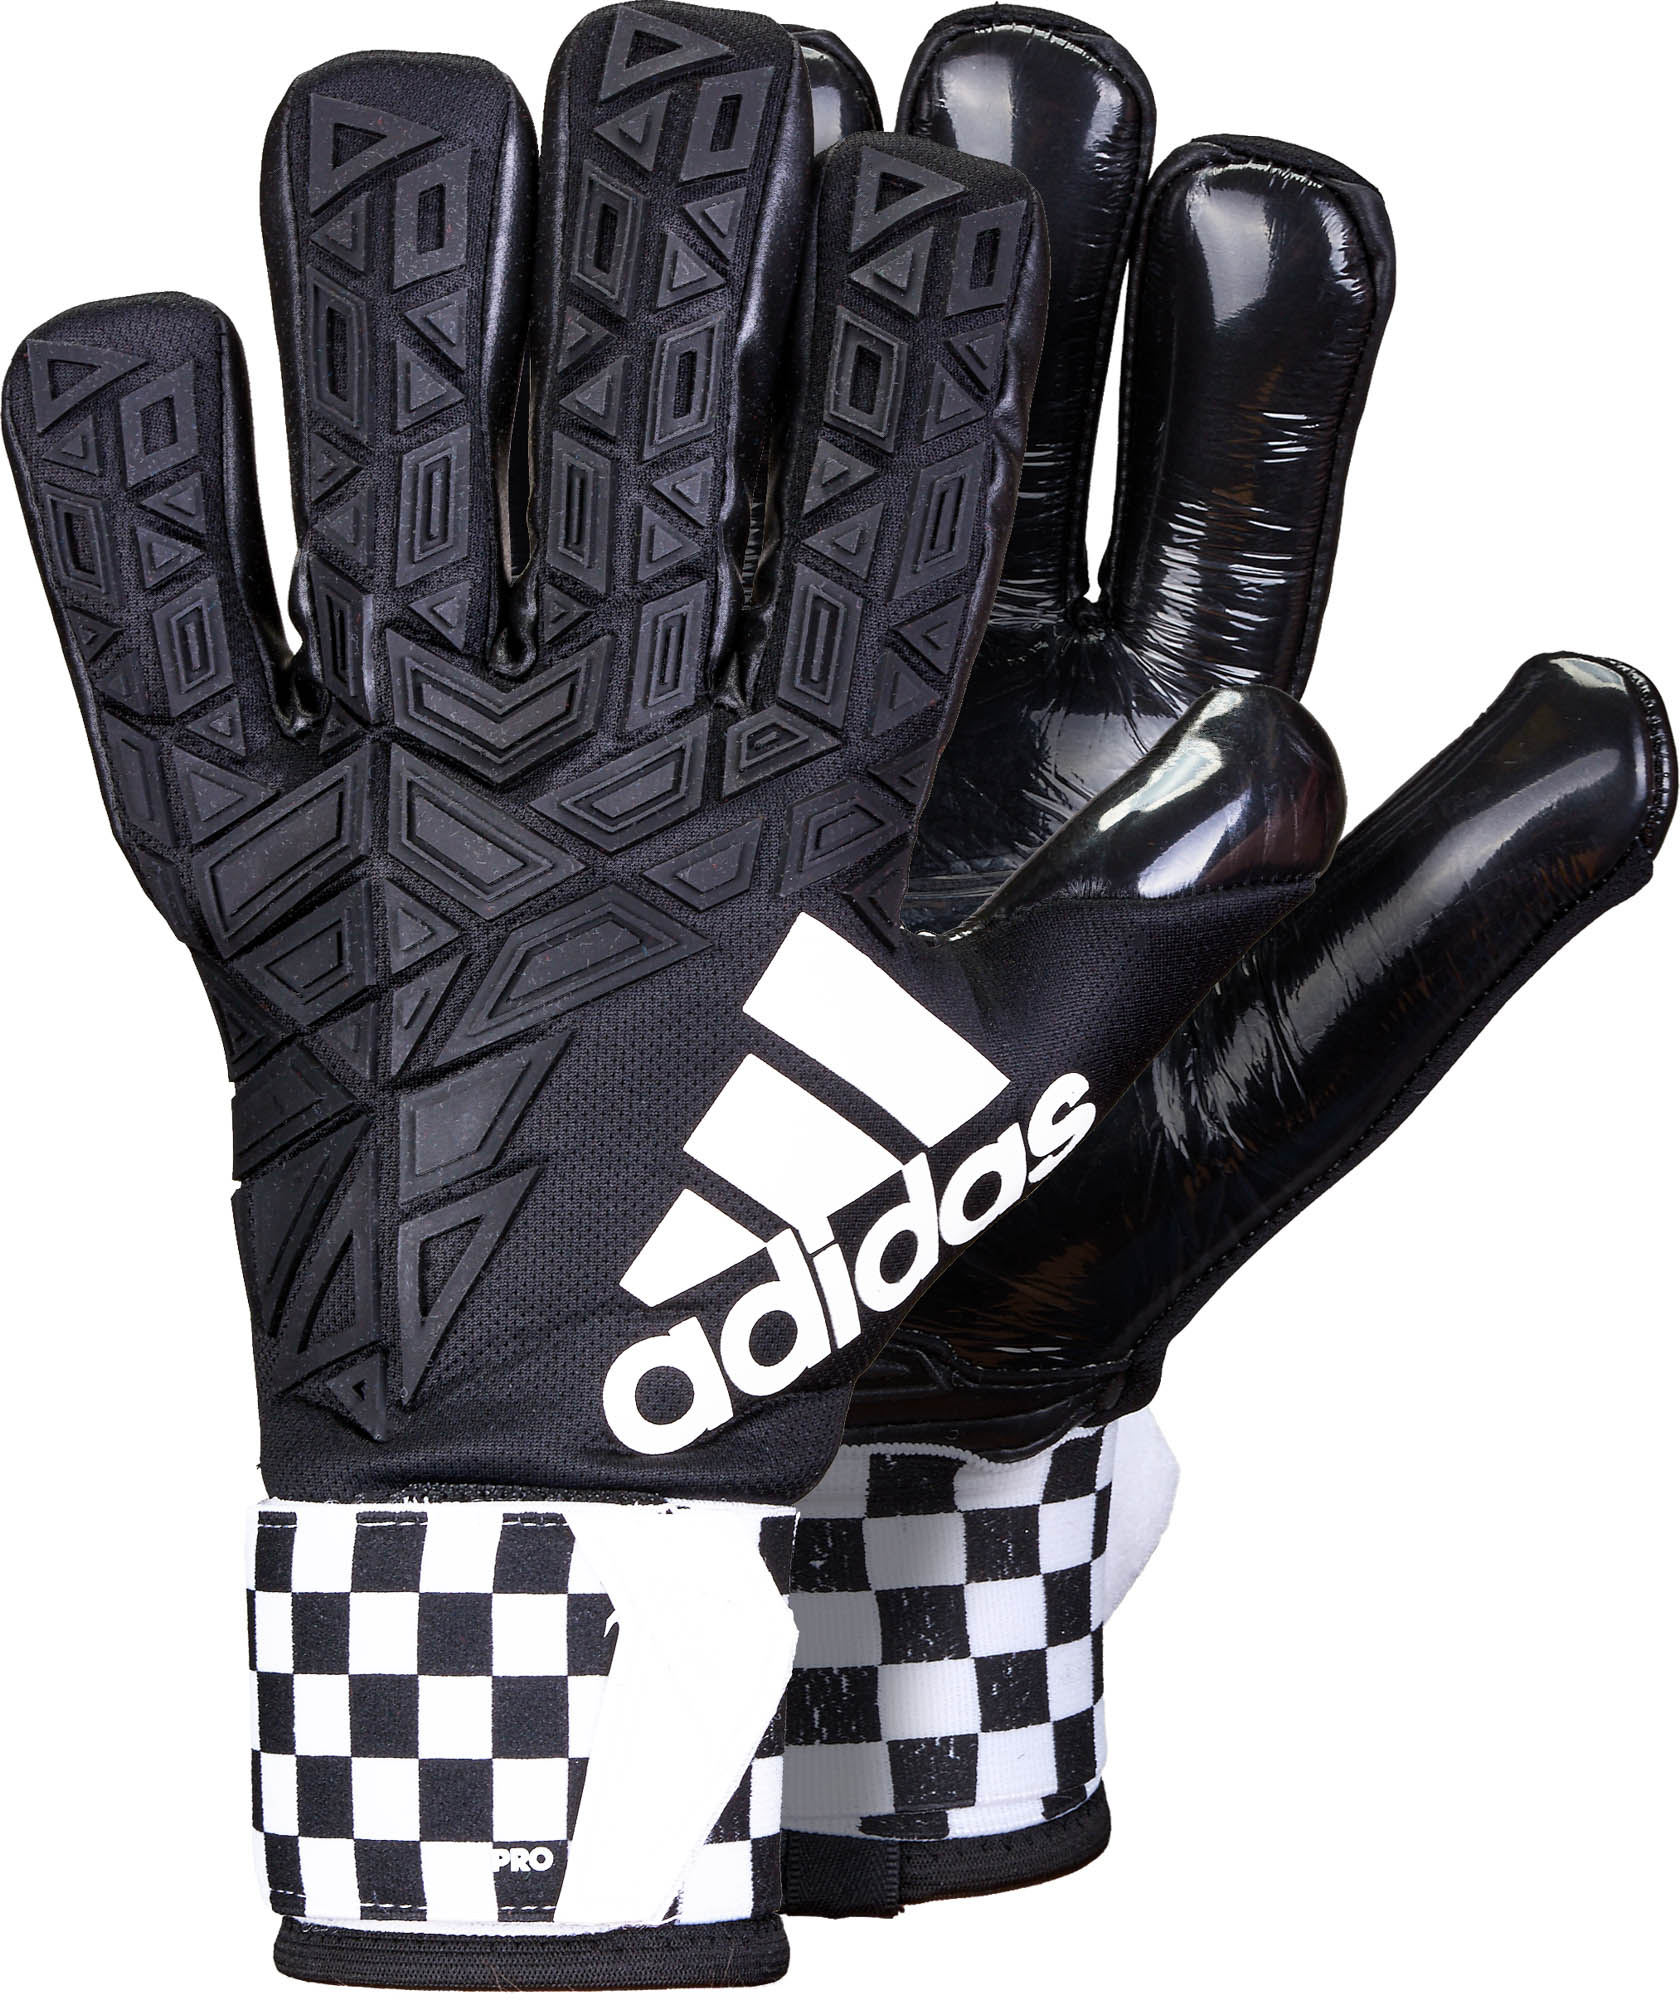 adidas ACE Trans Pro Goalkeeper Gloves - Checkered Flag - Black & White - Master